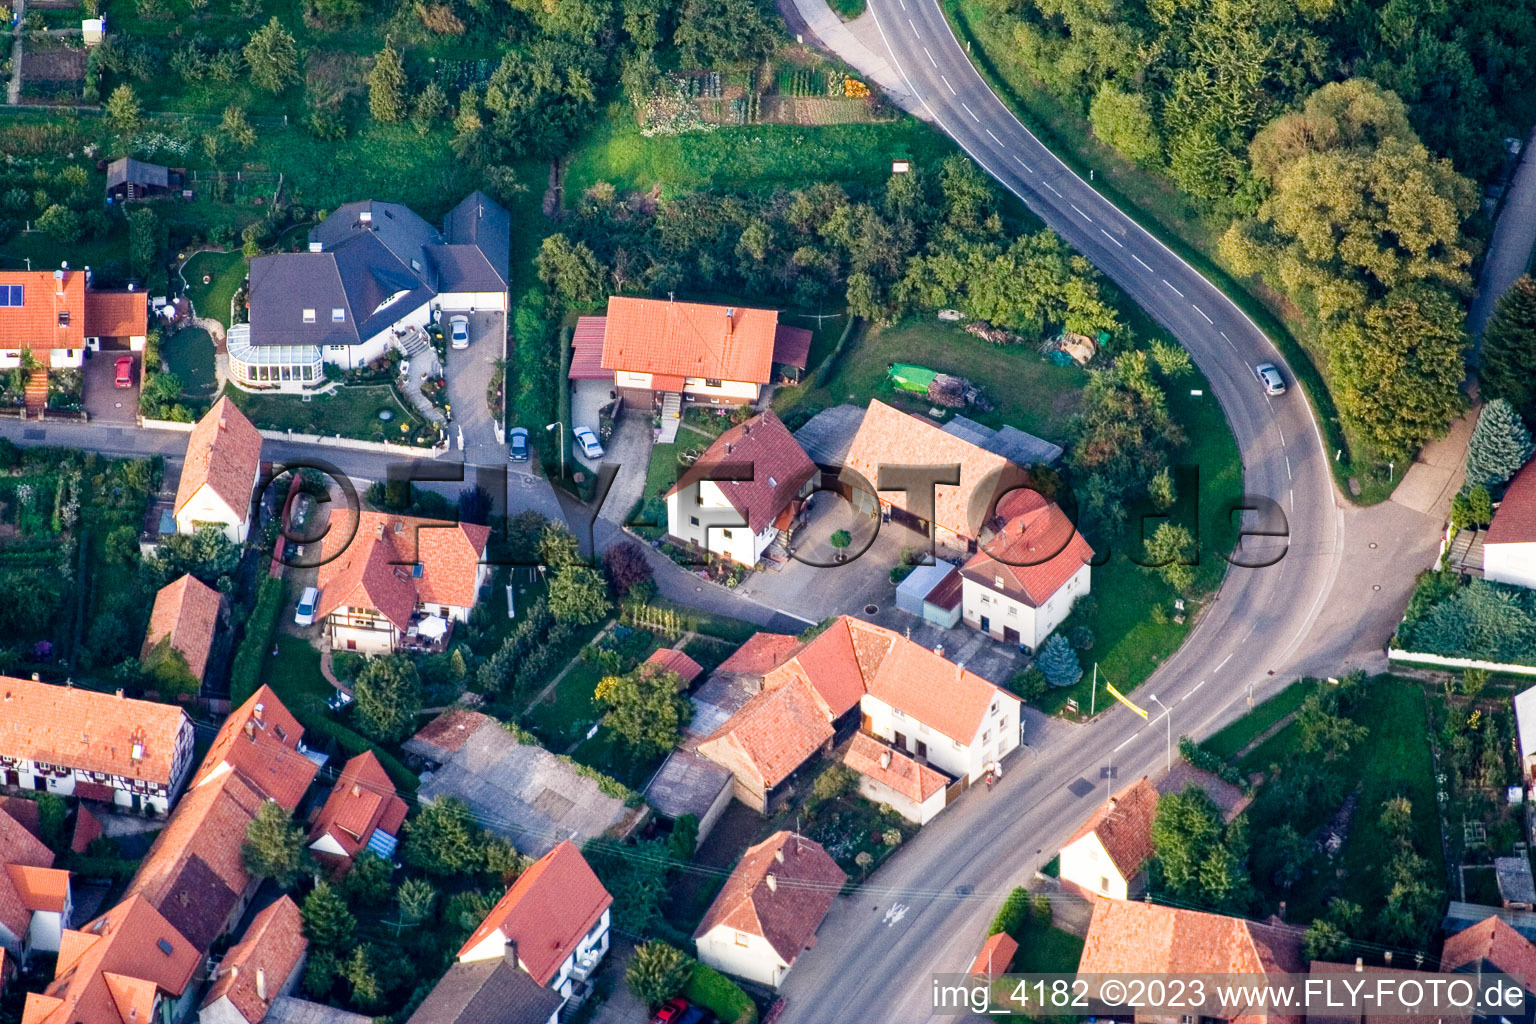 Quartier Schweigen in Schweigen-Rechtenbach dans le département Rhénanie-Palatinat, Allemagne vue d'en haut